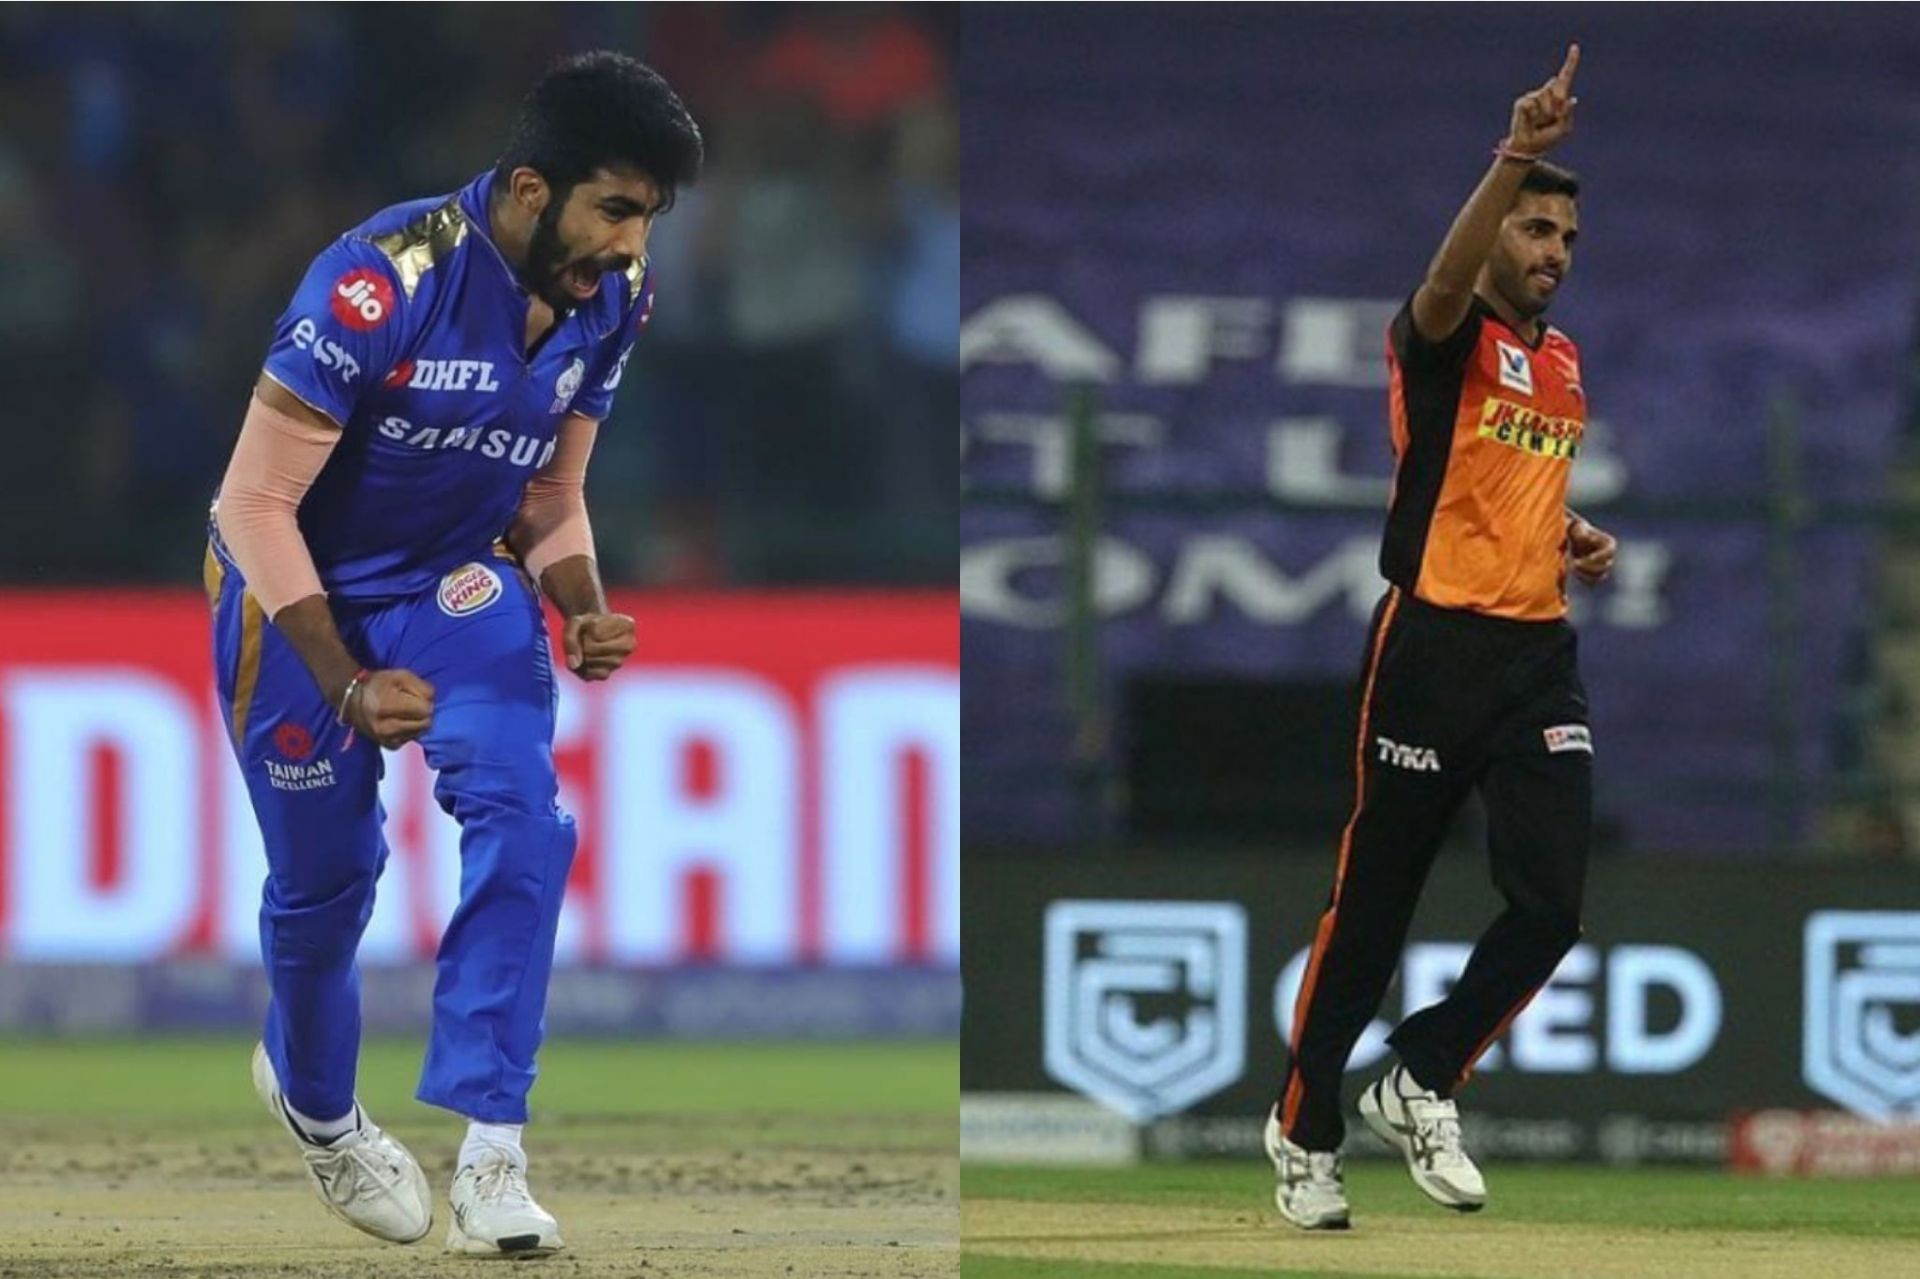 Jasprit Bumrah (L) and Bhuvneshwar Kumar (R) have been consistent death bowlers